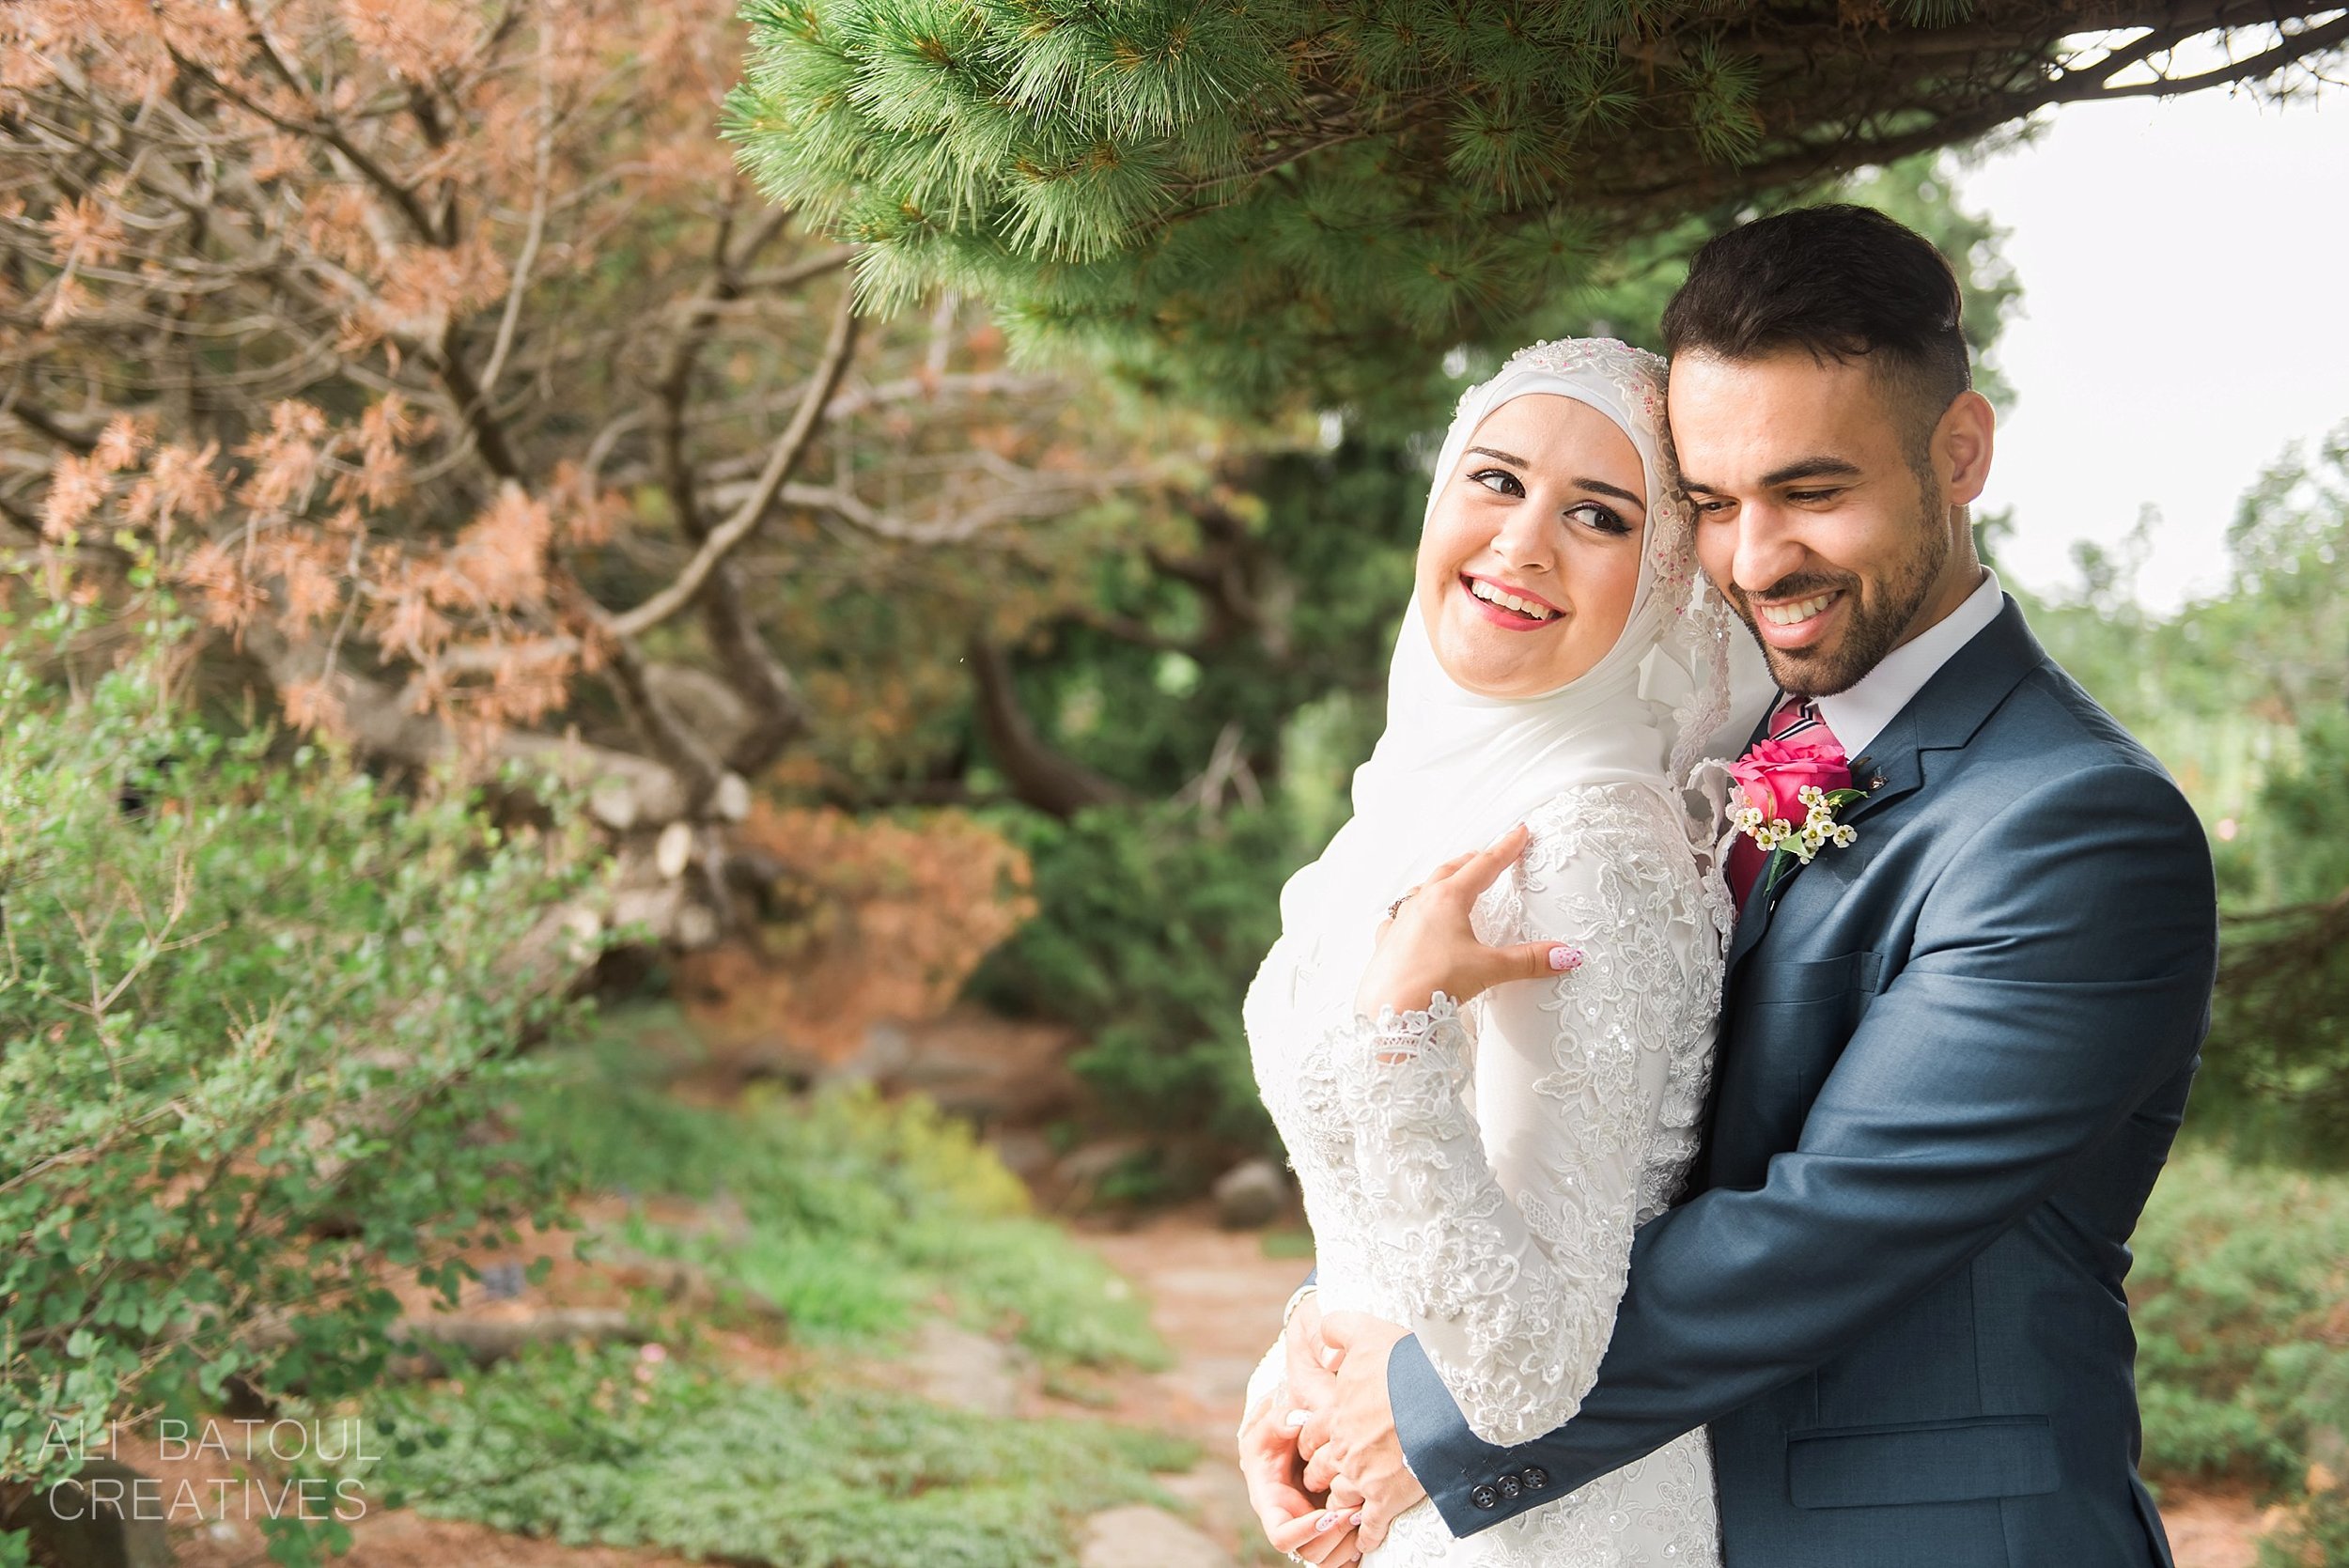 Hanan + Said - Ali Batoul Creatives Fine Art Wedding Photography_0286.jpg